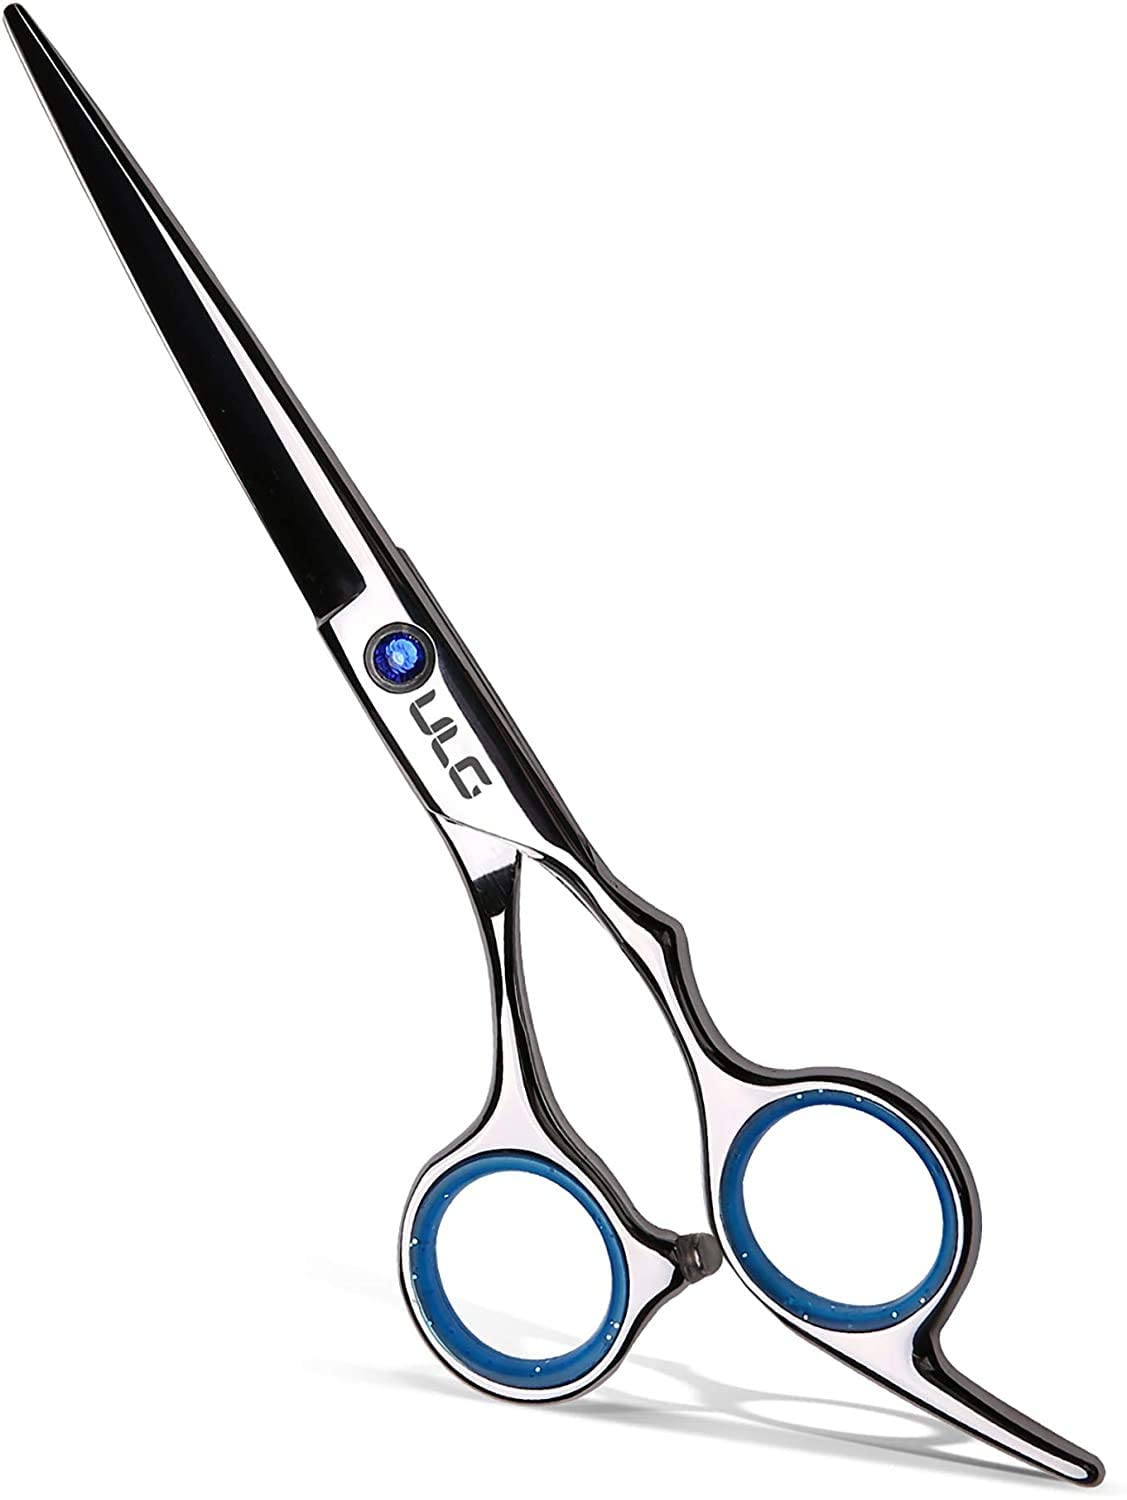 Hair Cutting Scissors, ULG Professional Hair Scissors [...]